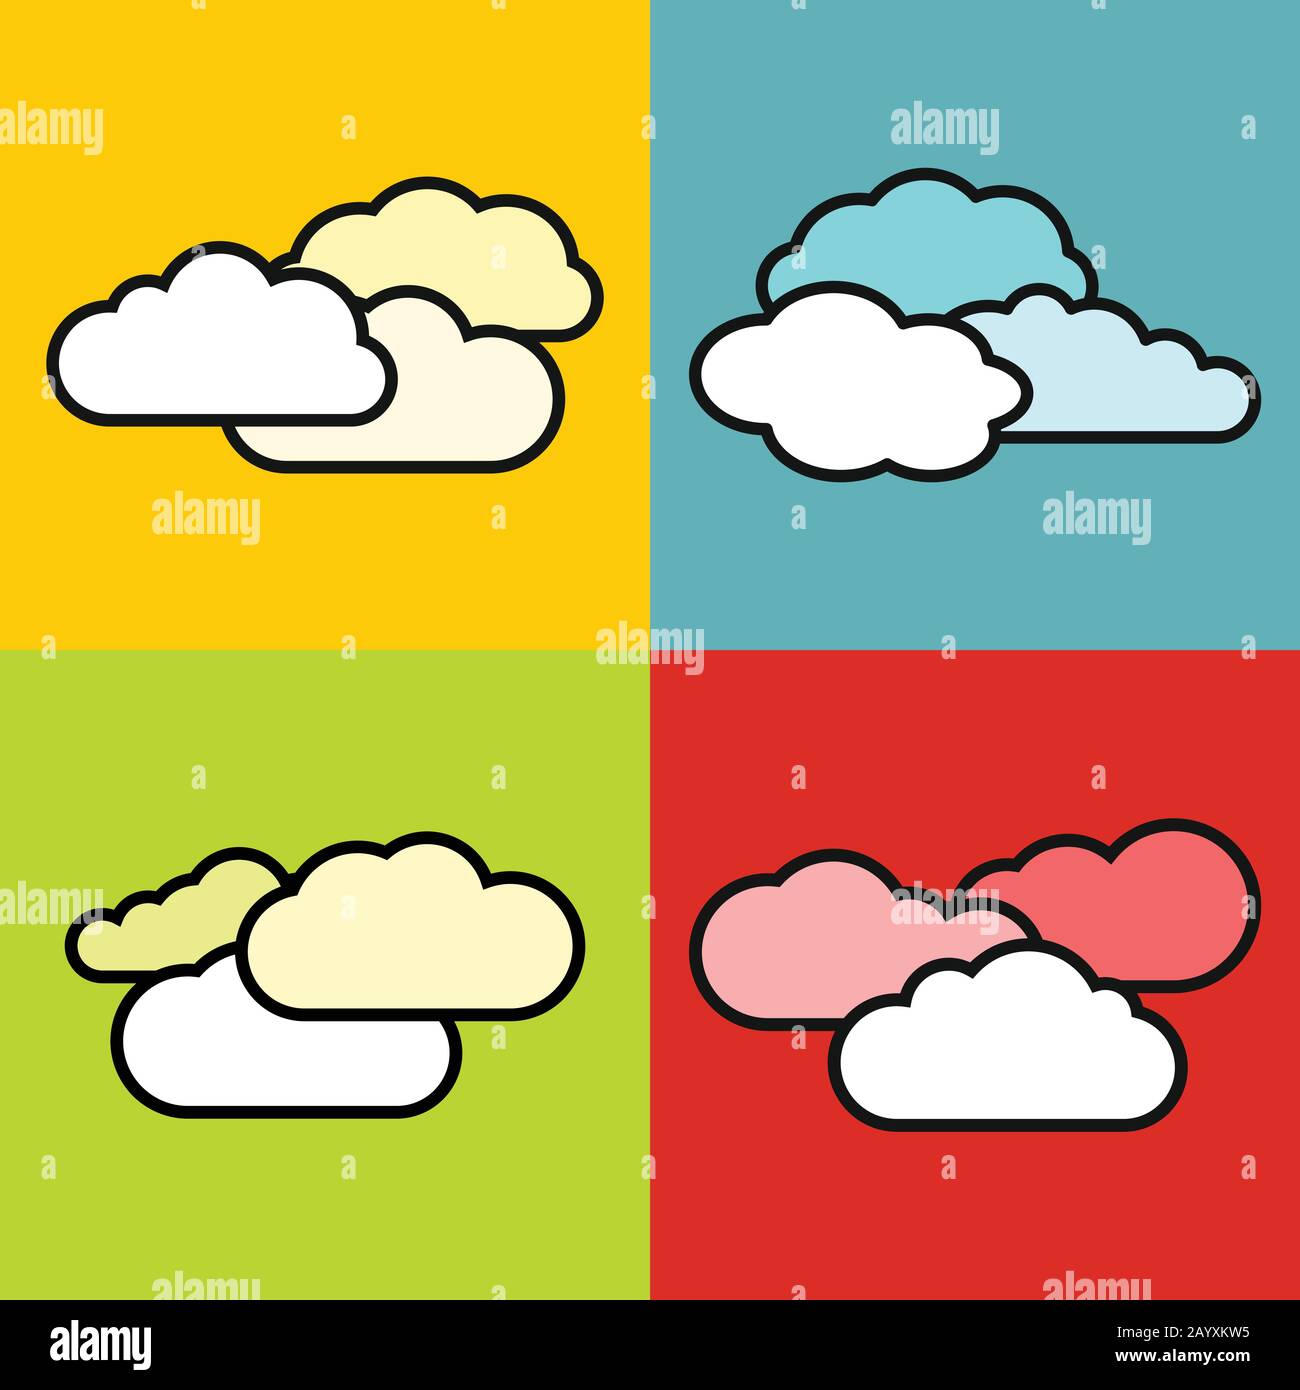 Flache Wolkensymbole auf Farbhintergrund. Cloudscape farbenfrohe Vektorgrafiken Stock Vektor